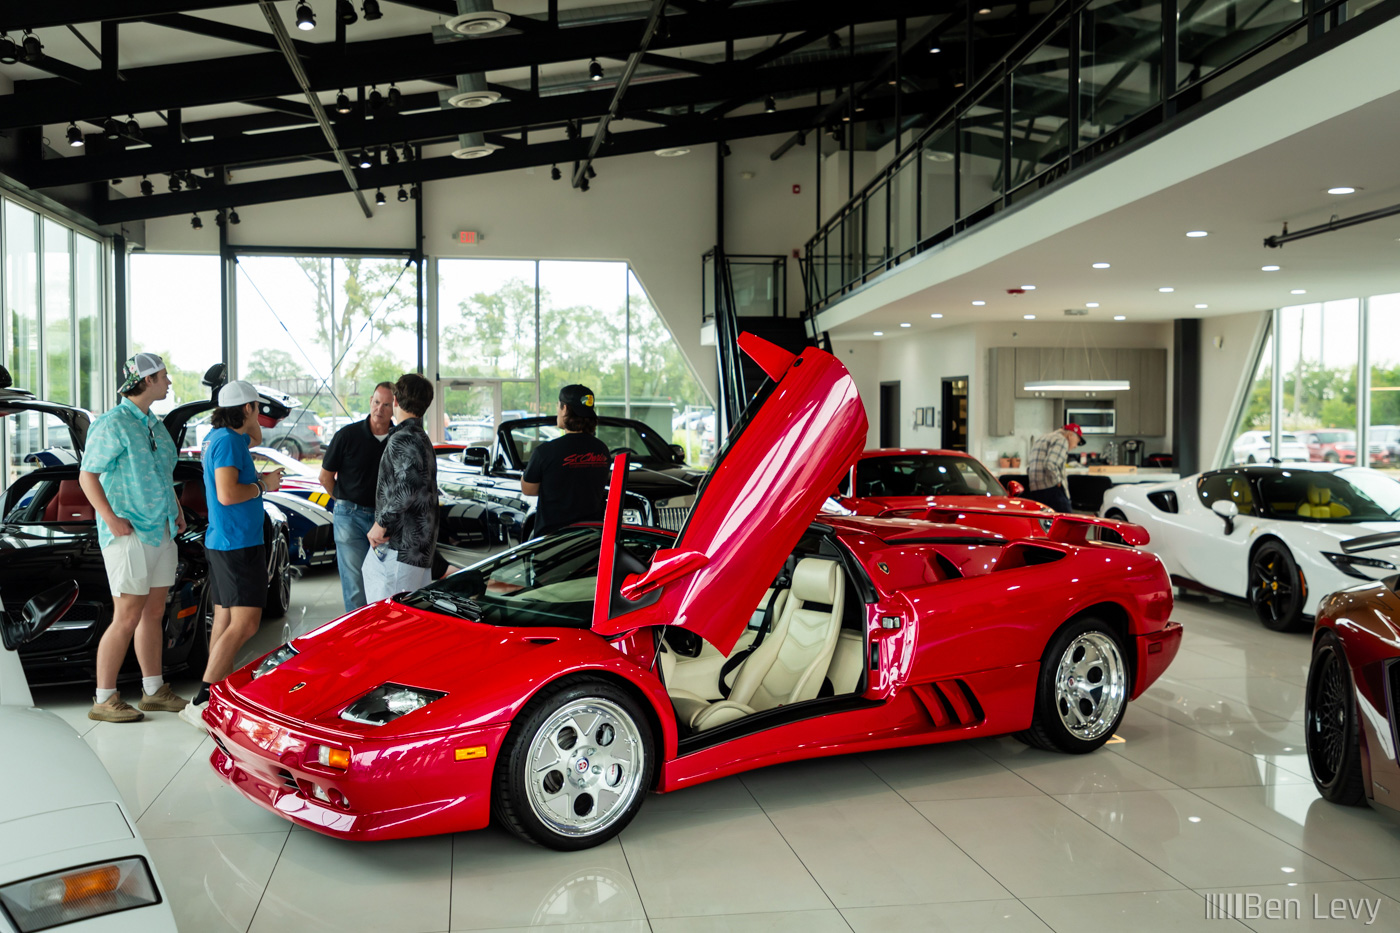 1999 Lamborghini Diablo VT Roadster in Rossa Targa